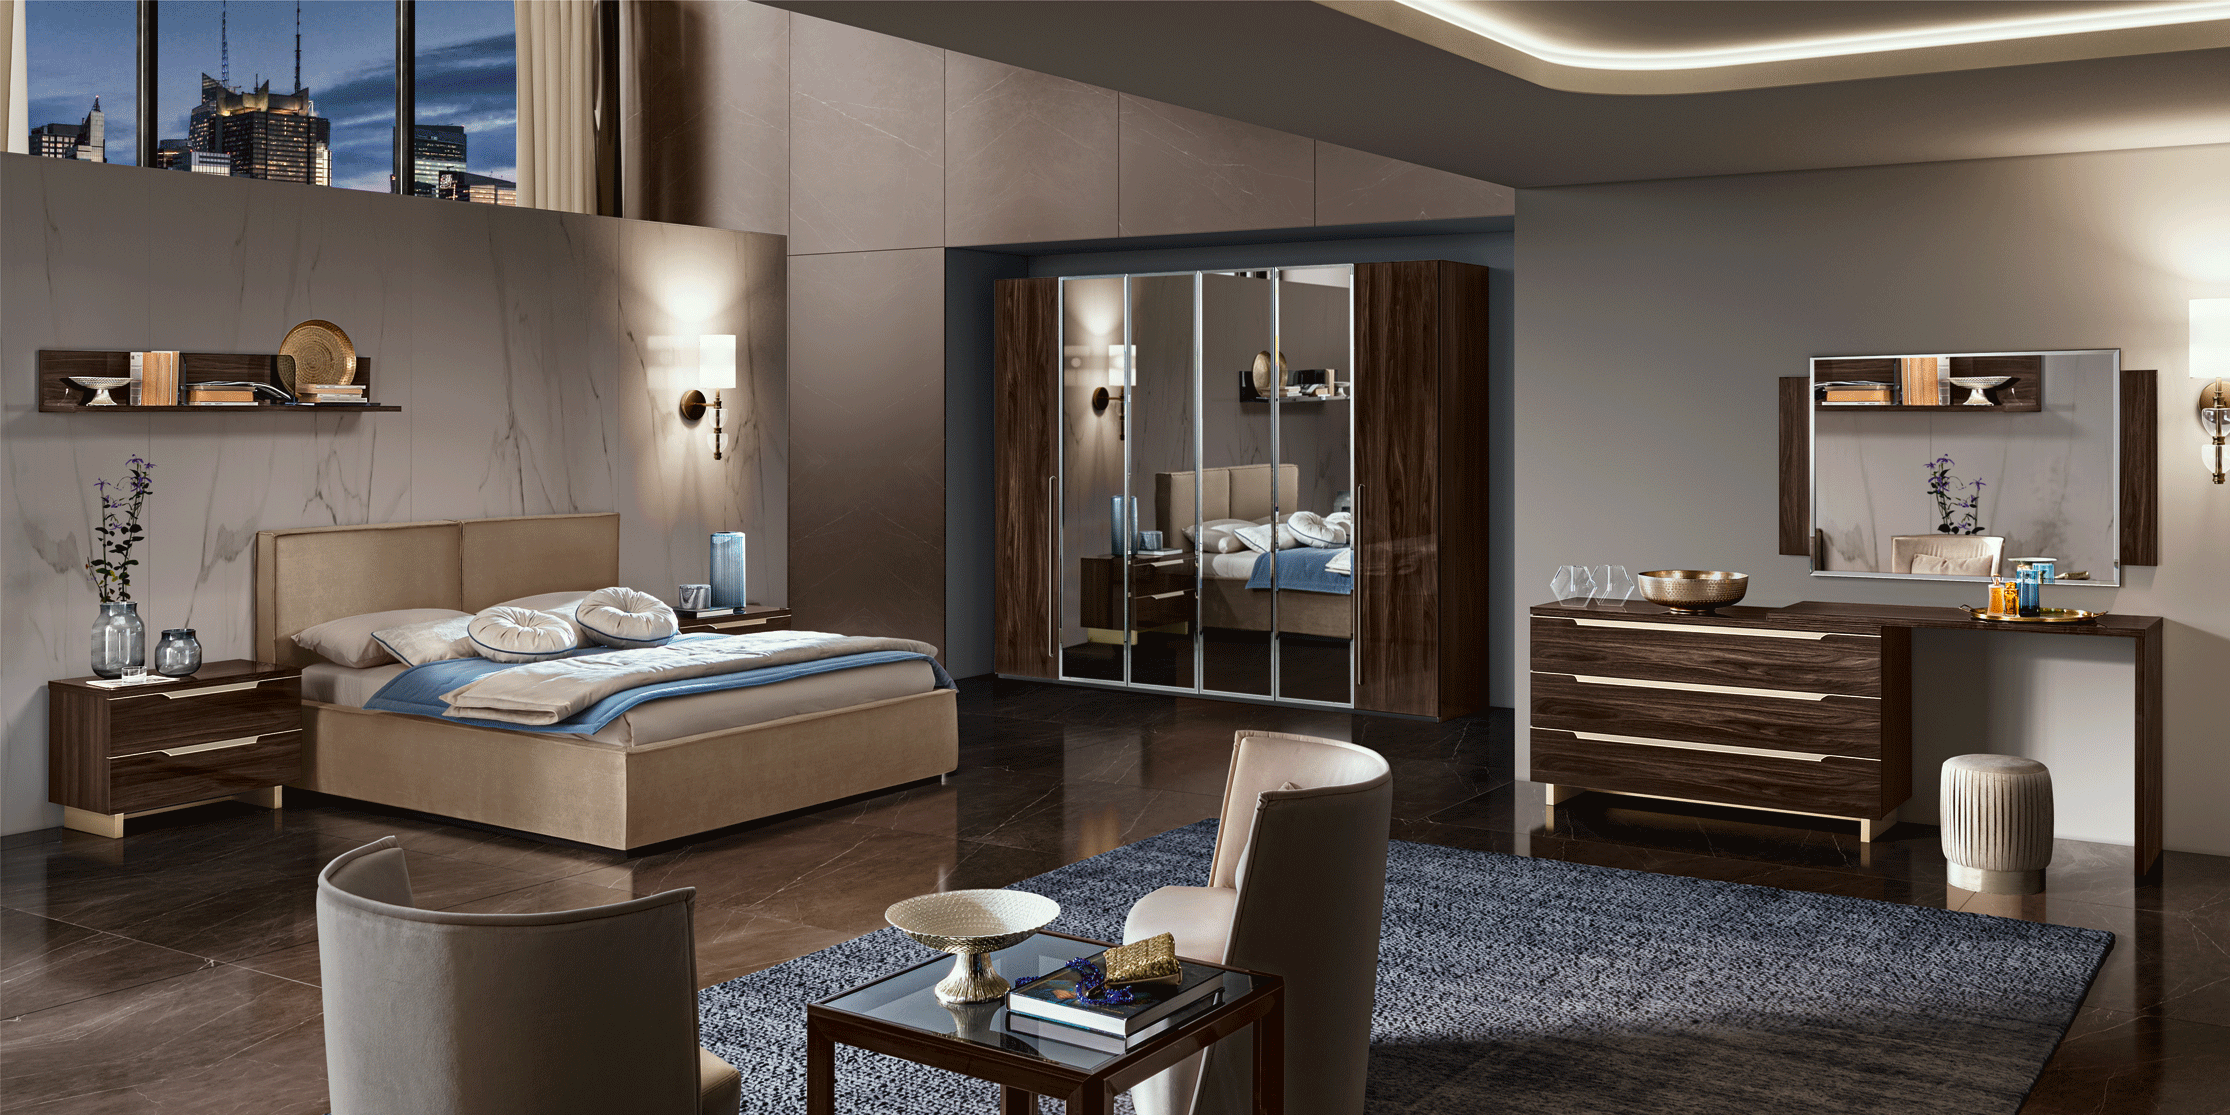 Bedroom Furniture Nightstands Smart Bedgroup Walnut Additional items